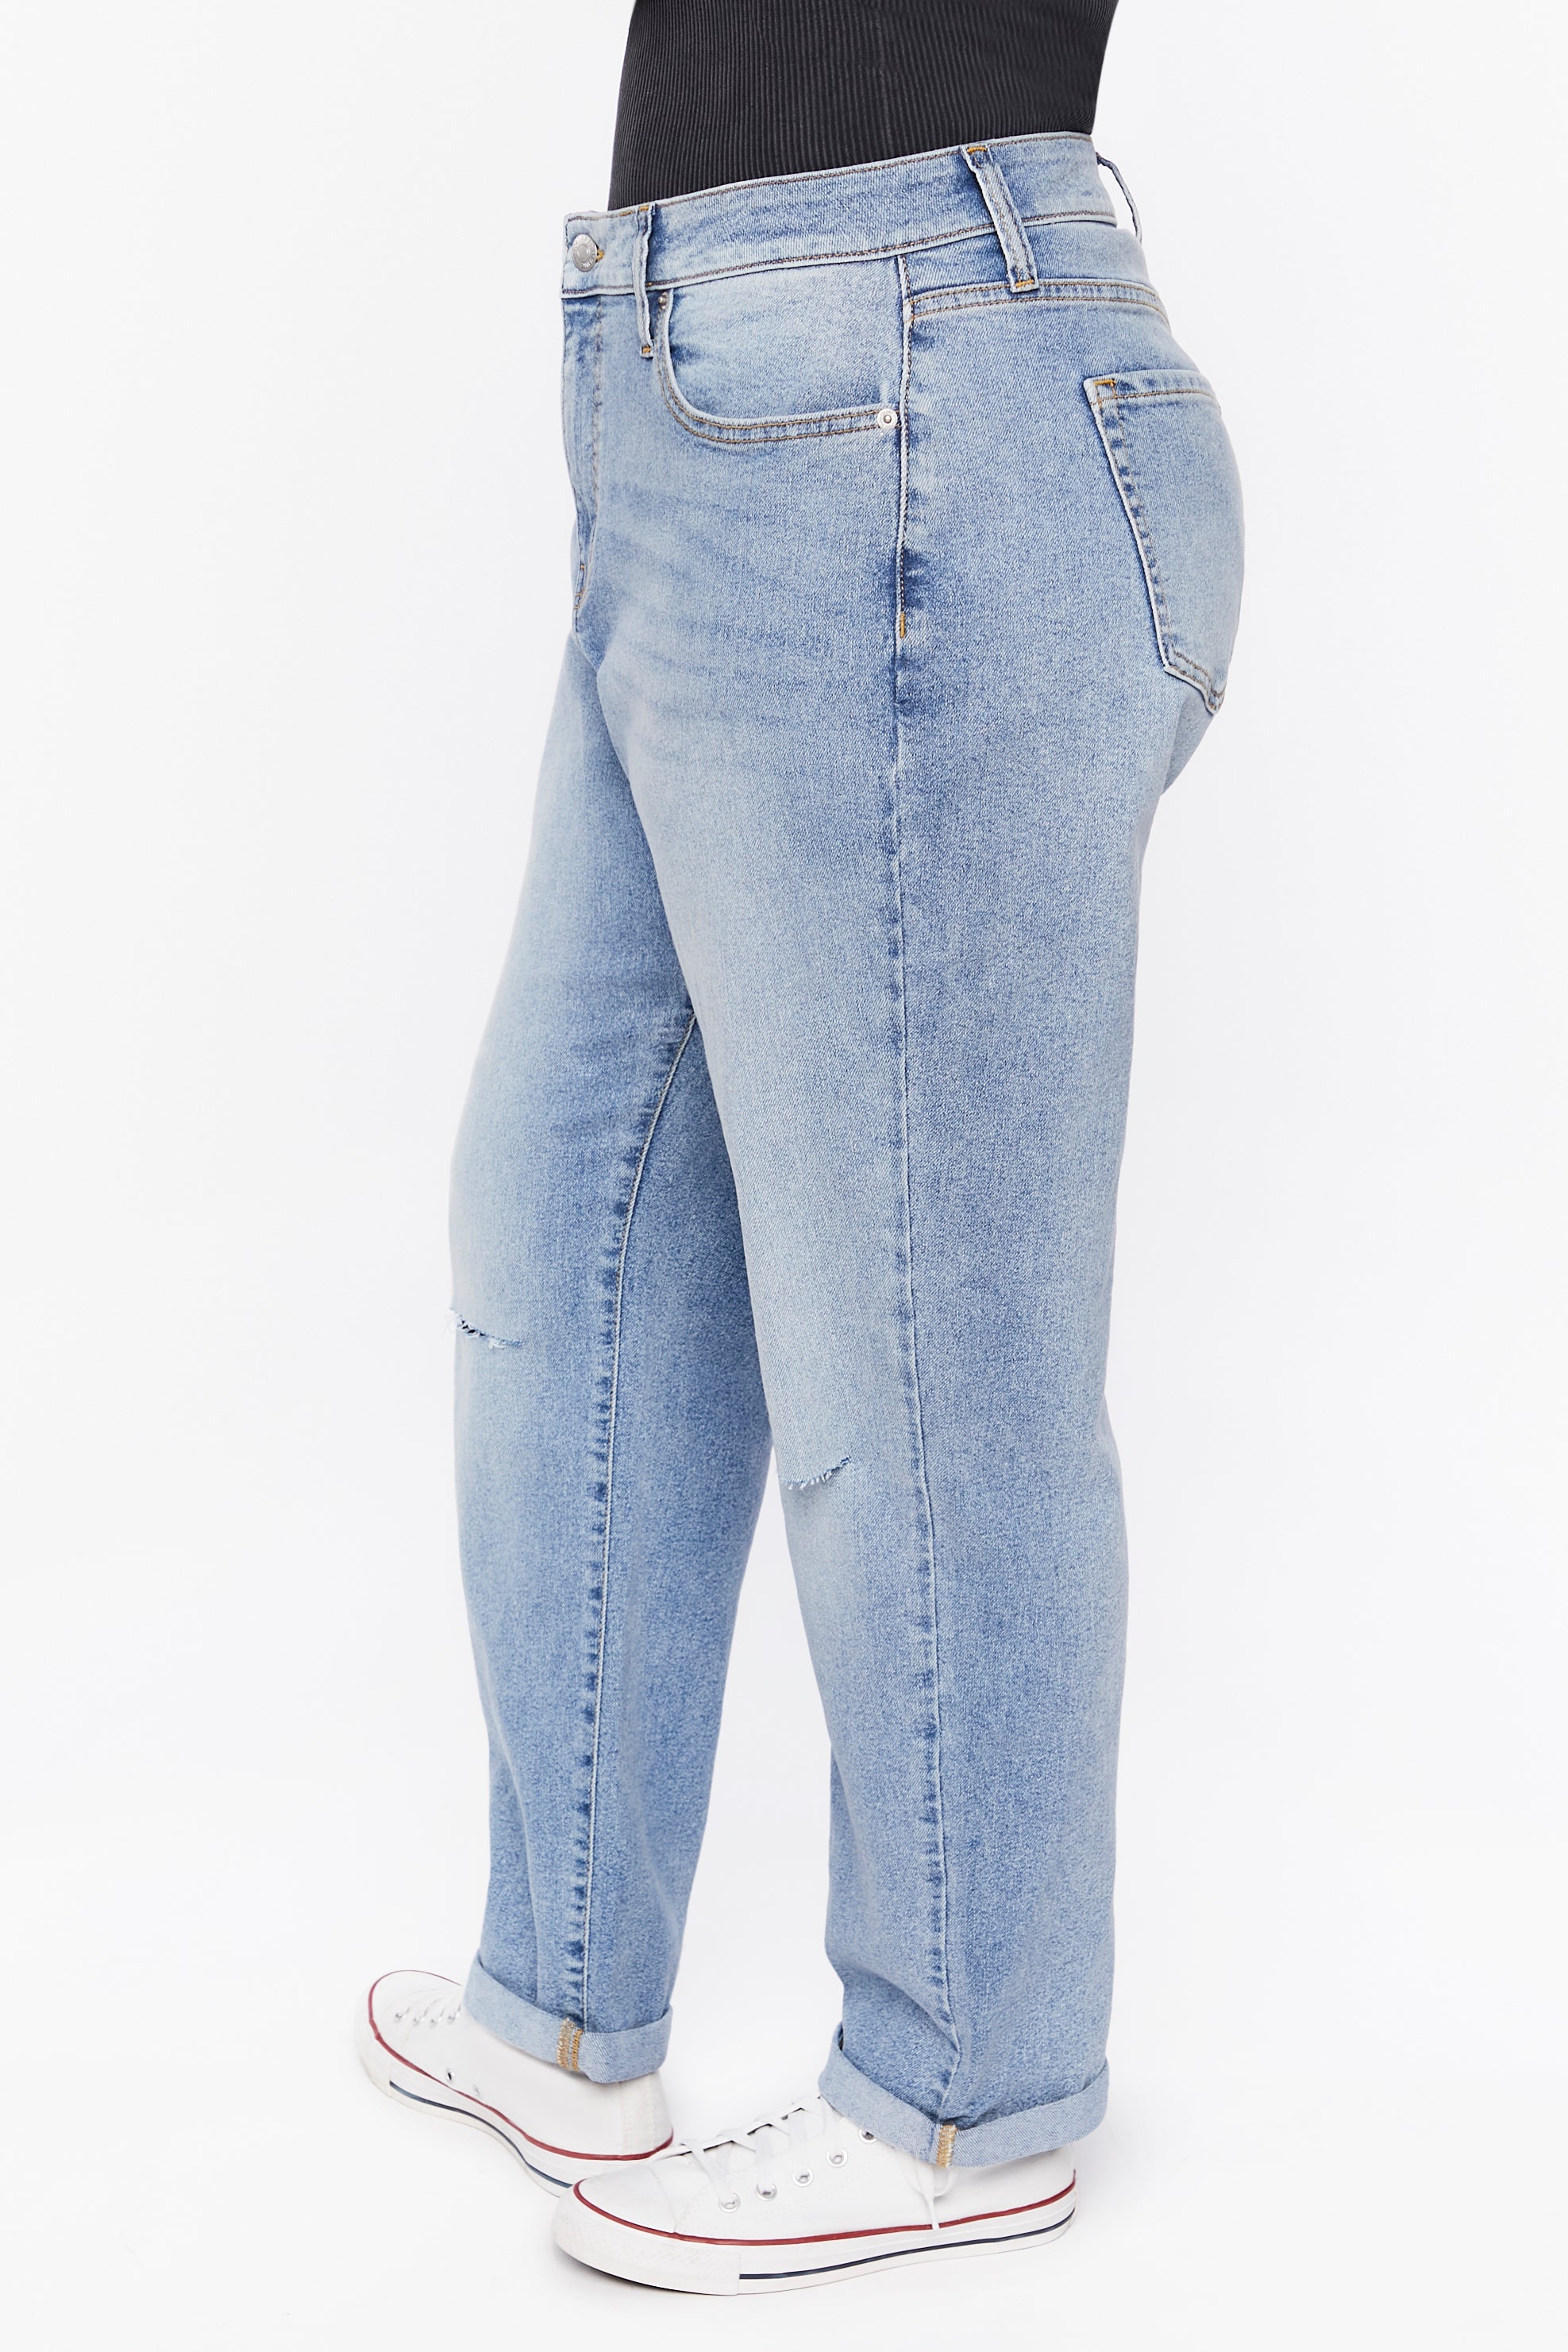 Mediumdenim Plus Size Distressed Baggy Jeans 2